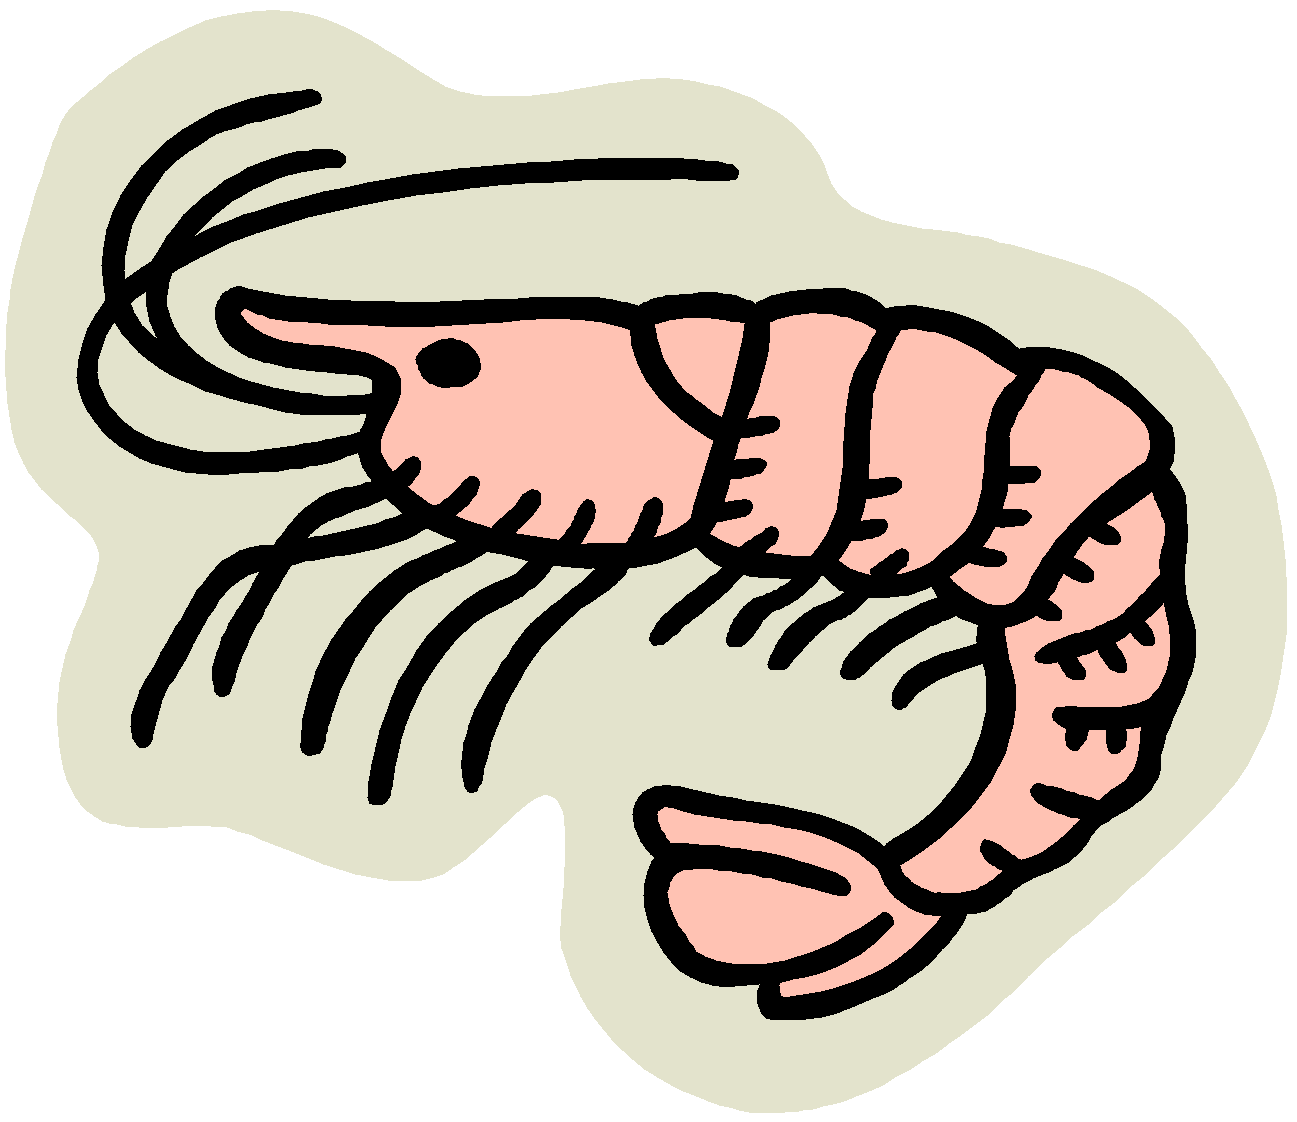 Shrimp clipart graphics